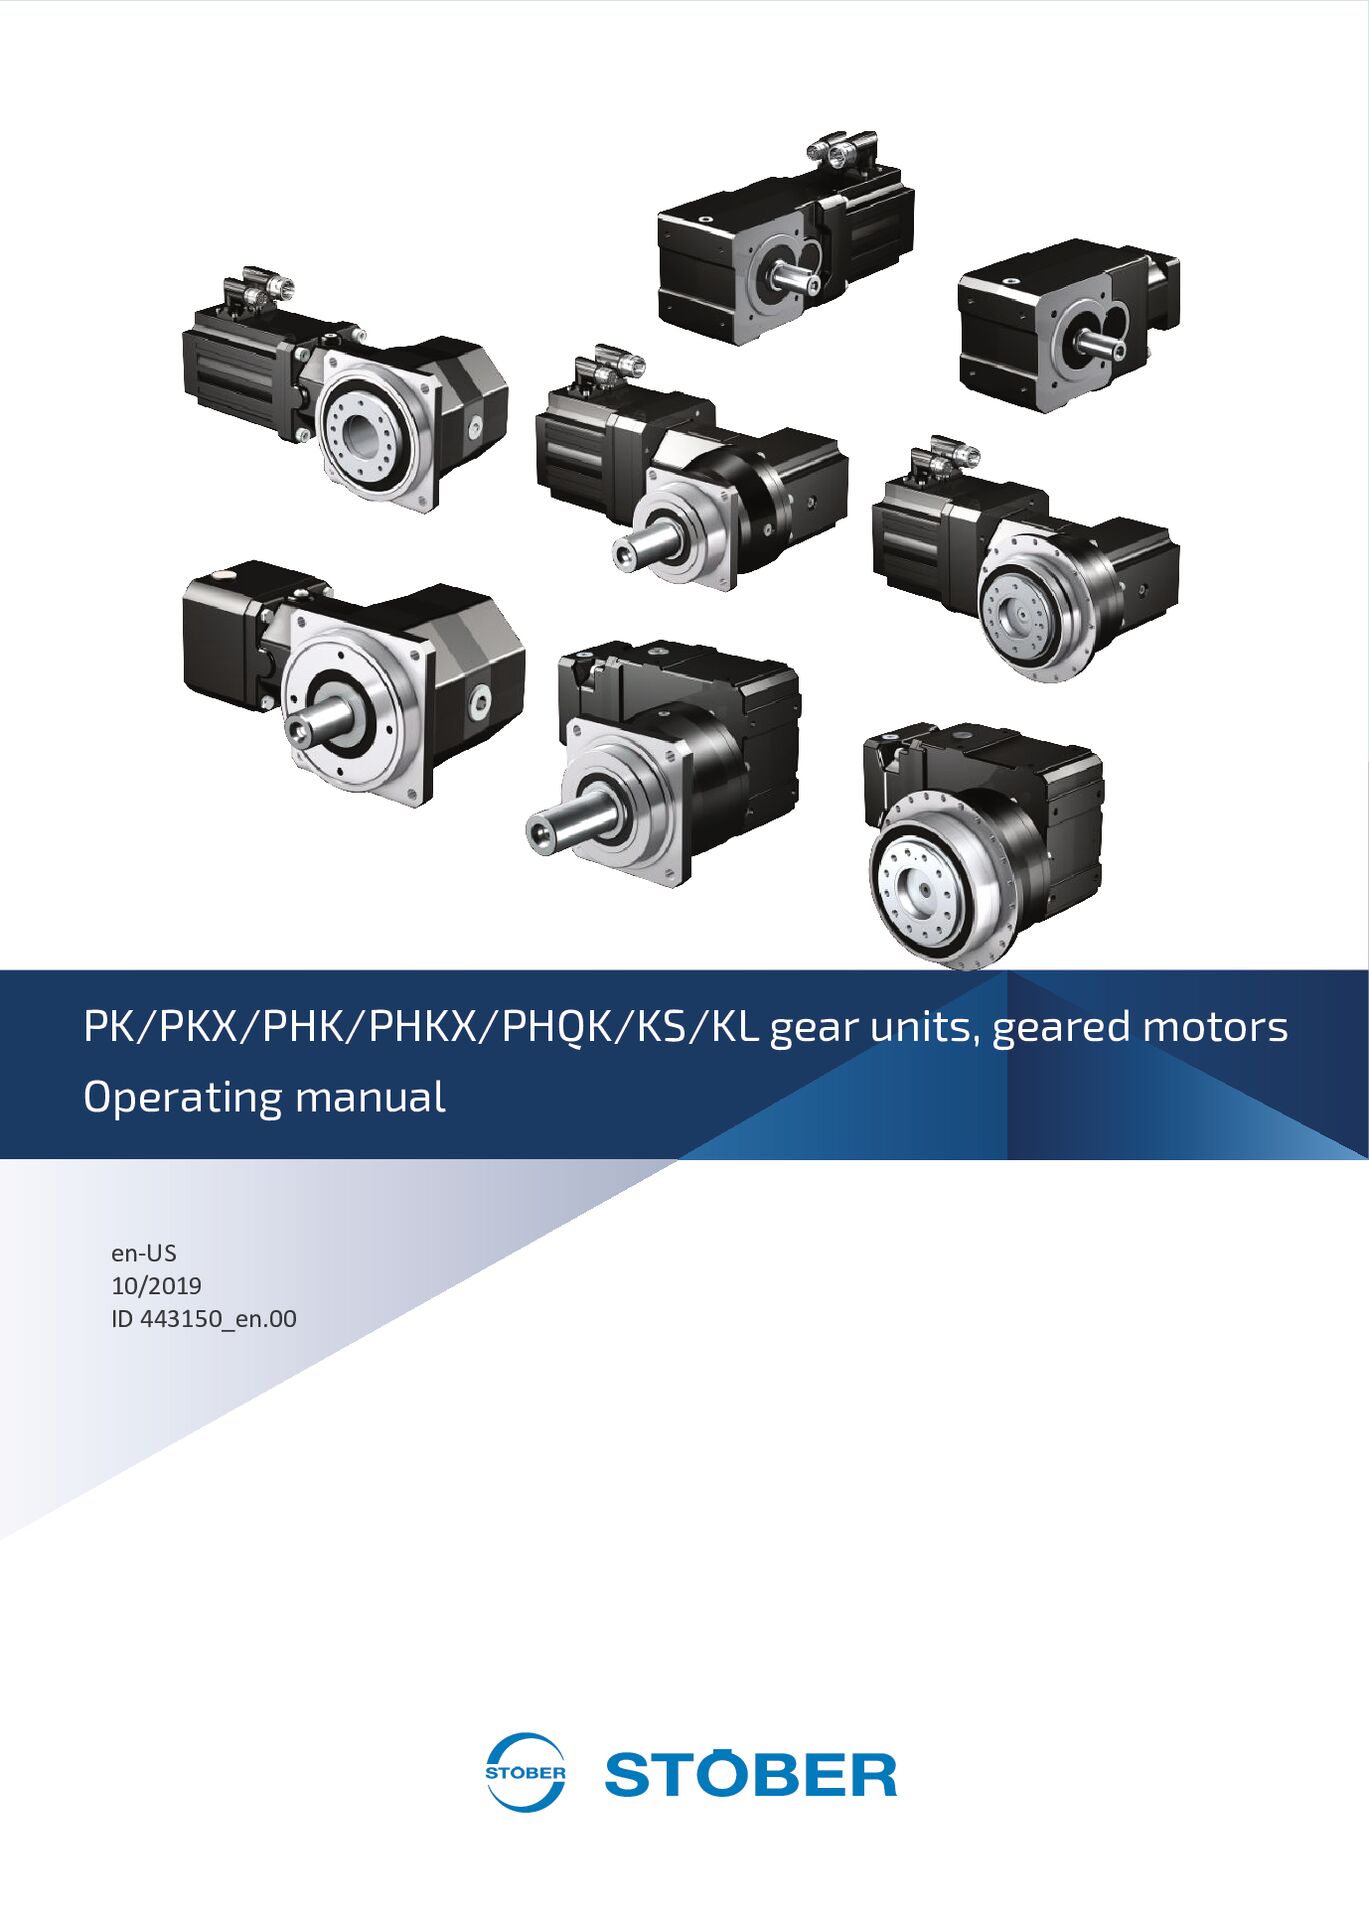 Operating manual PK PKX PHK PHKX PHQK KS KL gear units and geared motors